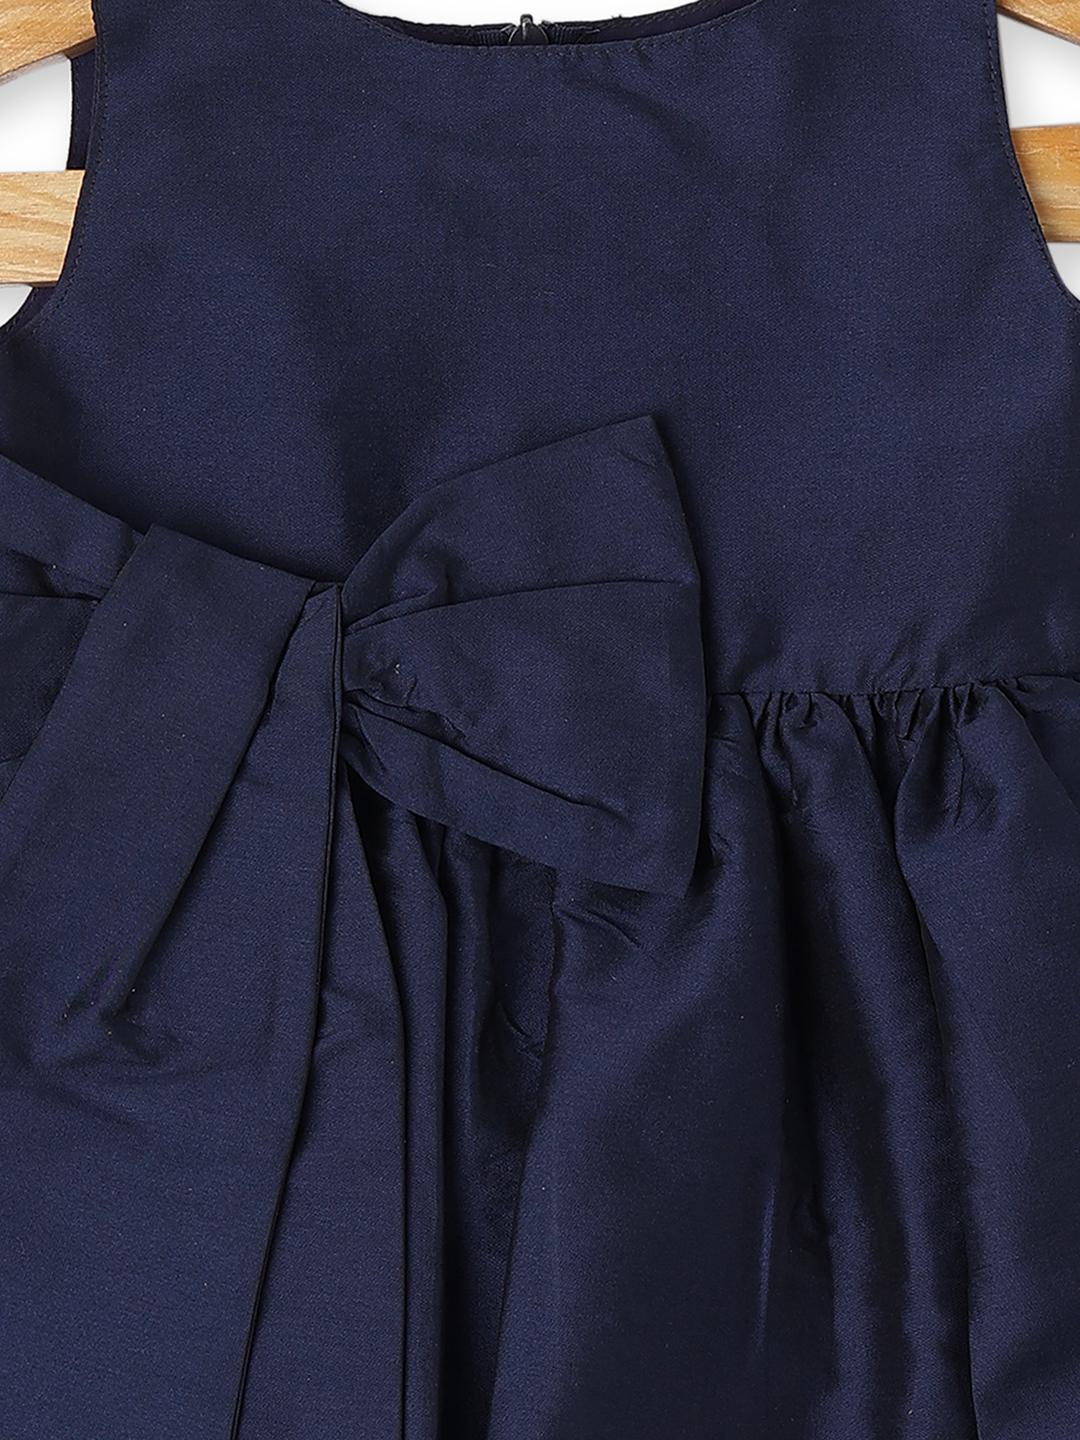 sleeveless-dress-with-bow-details-10510092BL, Kids Clothing, Modal Girl Dress